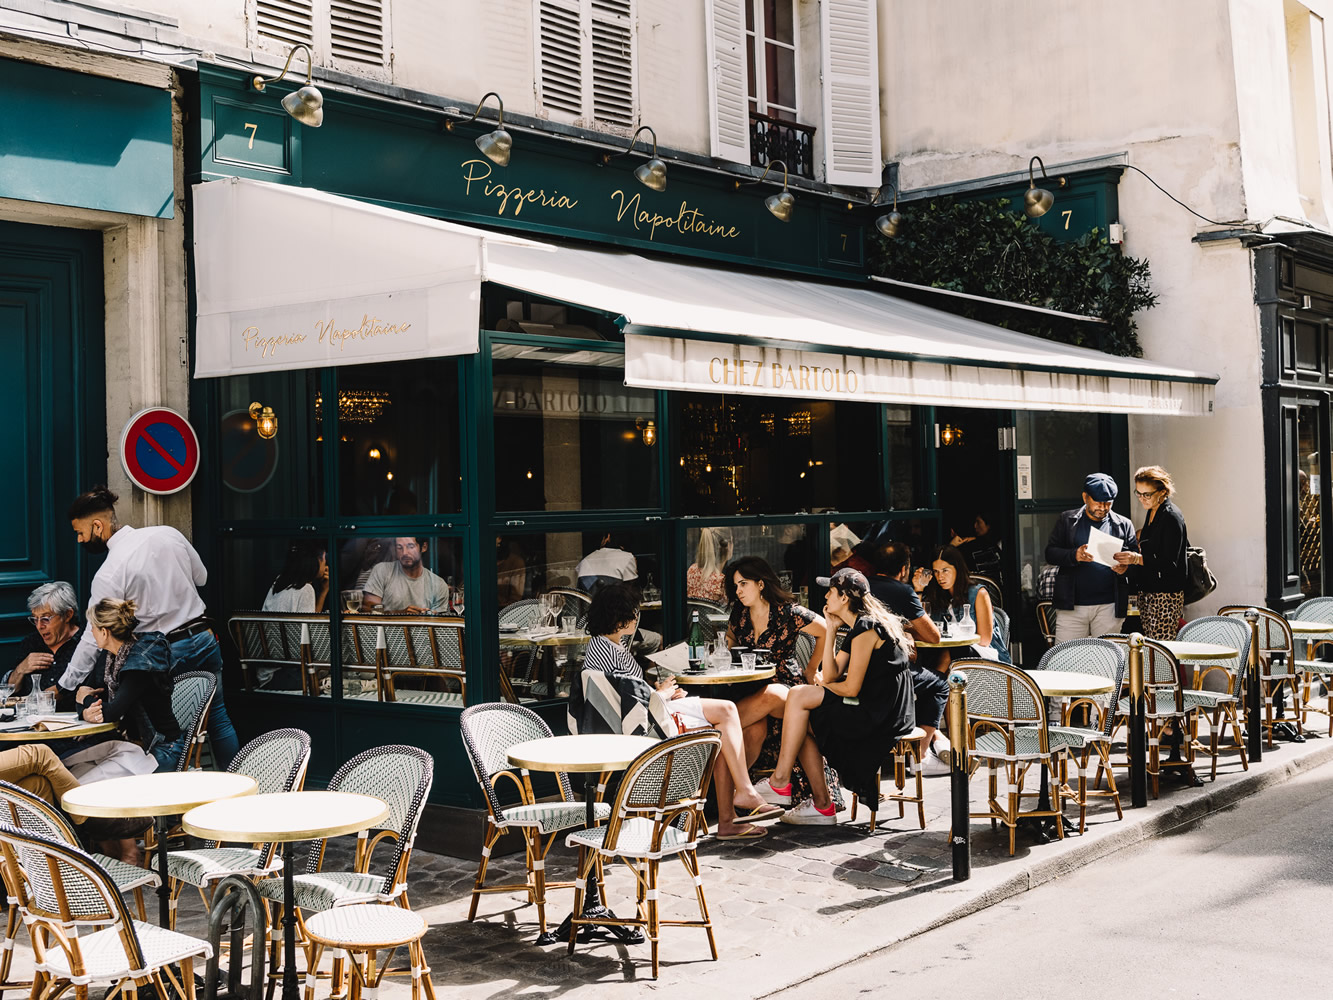 Top hotspots for pizza & pasta in Paris